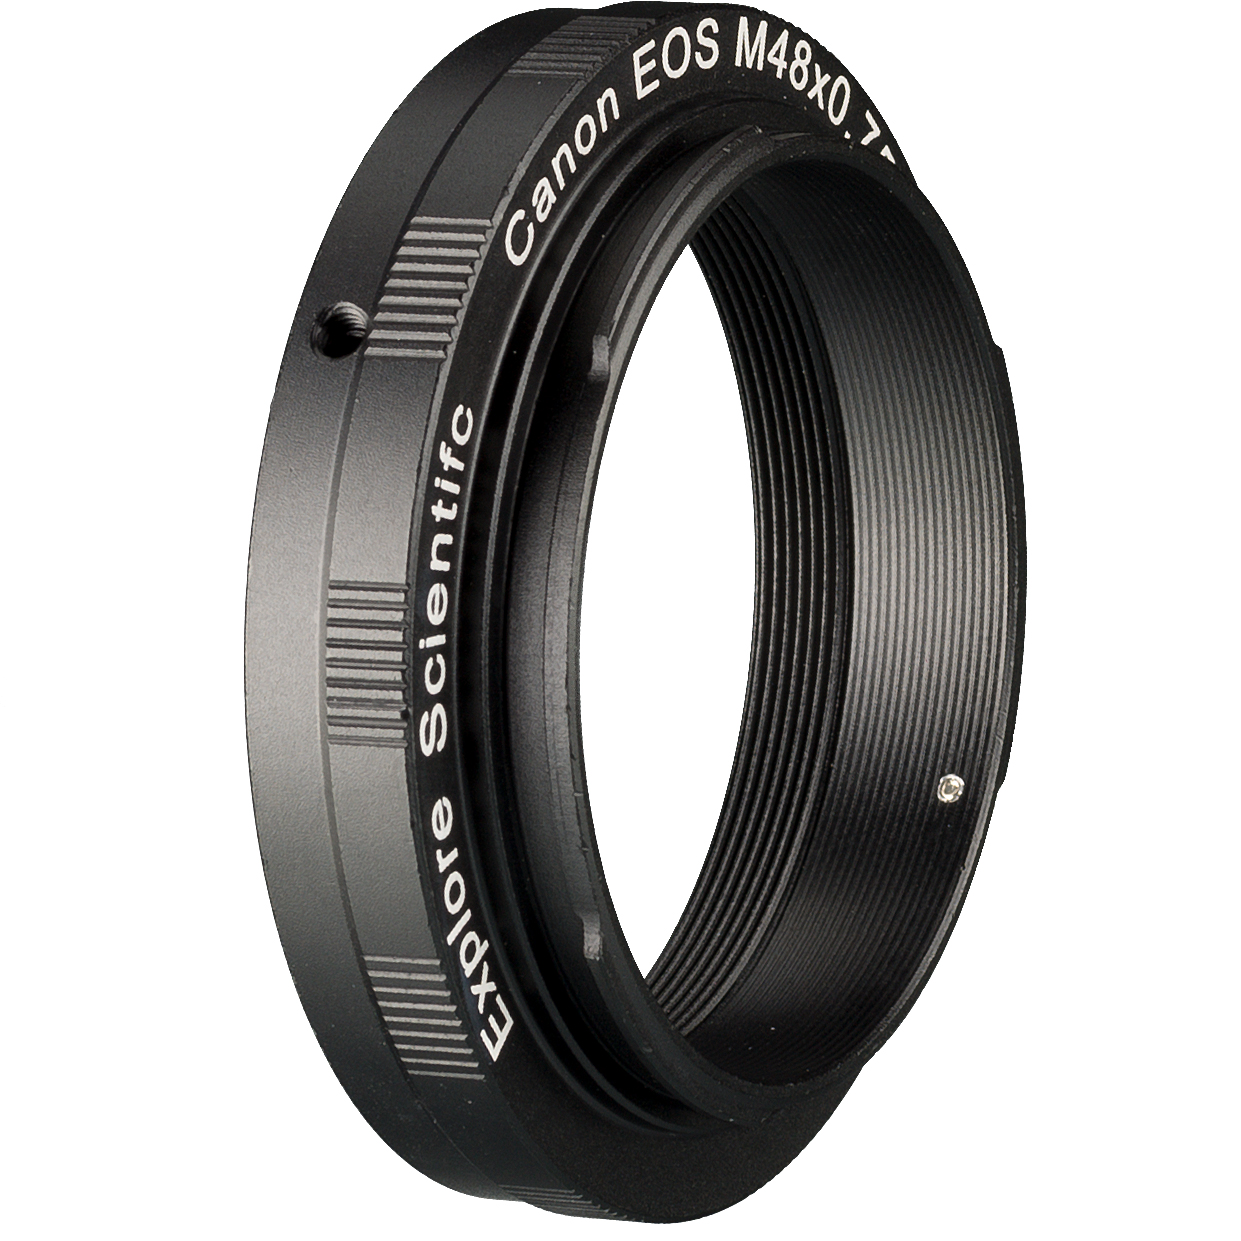 EXPLORE SCIENTIFIC Kamera-Ring M48x0.75 für Canon EOS